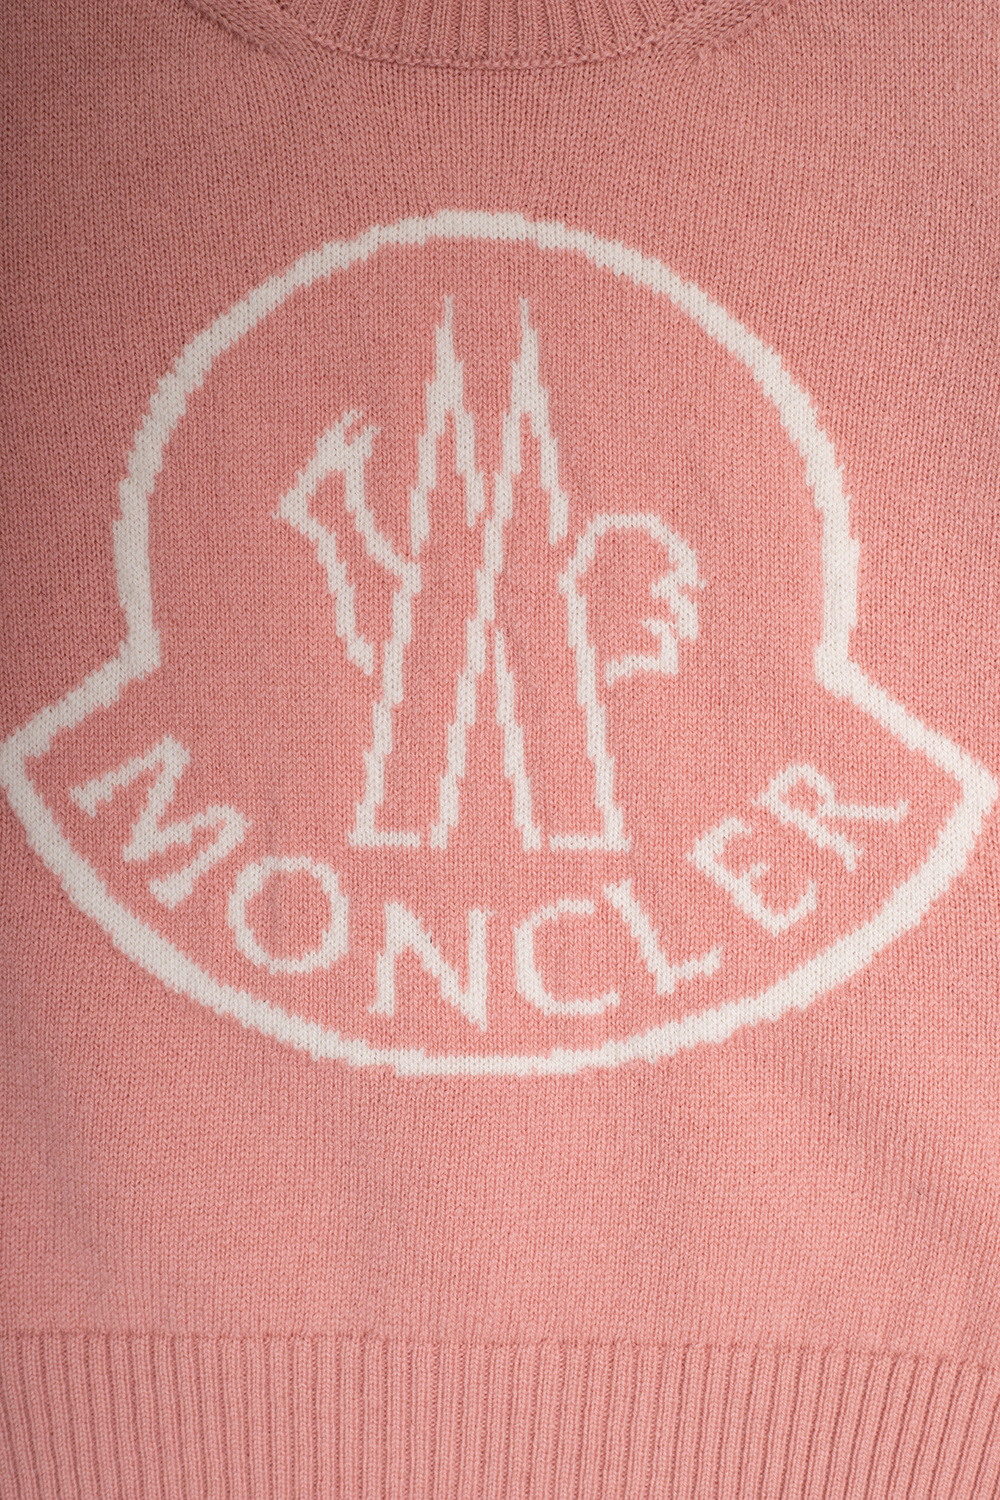 Moncler Enfant Sweatshirt enfant AS Monaco 2020 21 aigrut